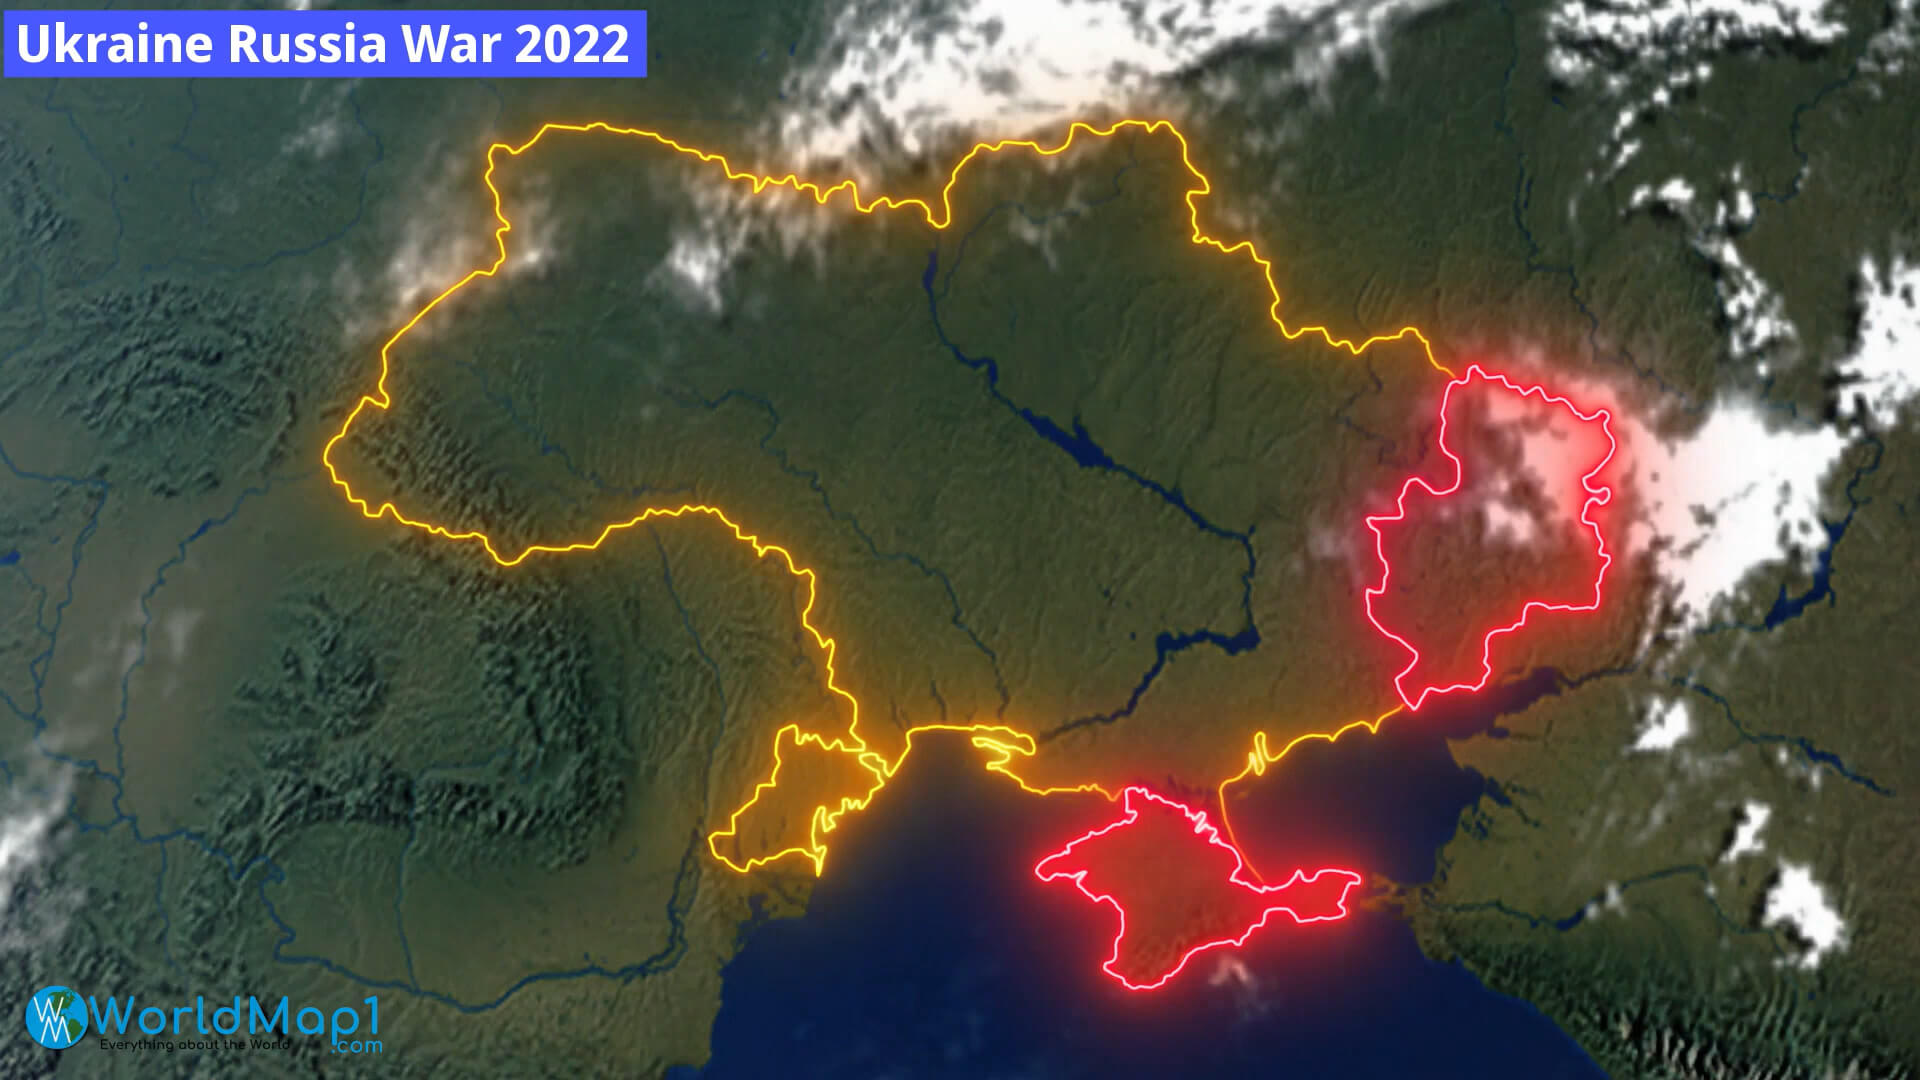 Ukraine Russia War 2022